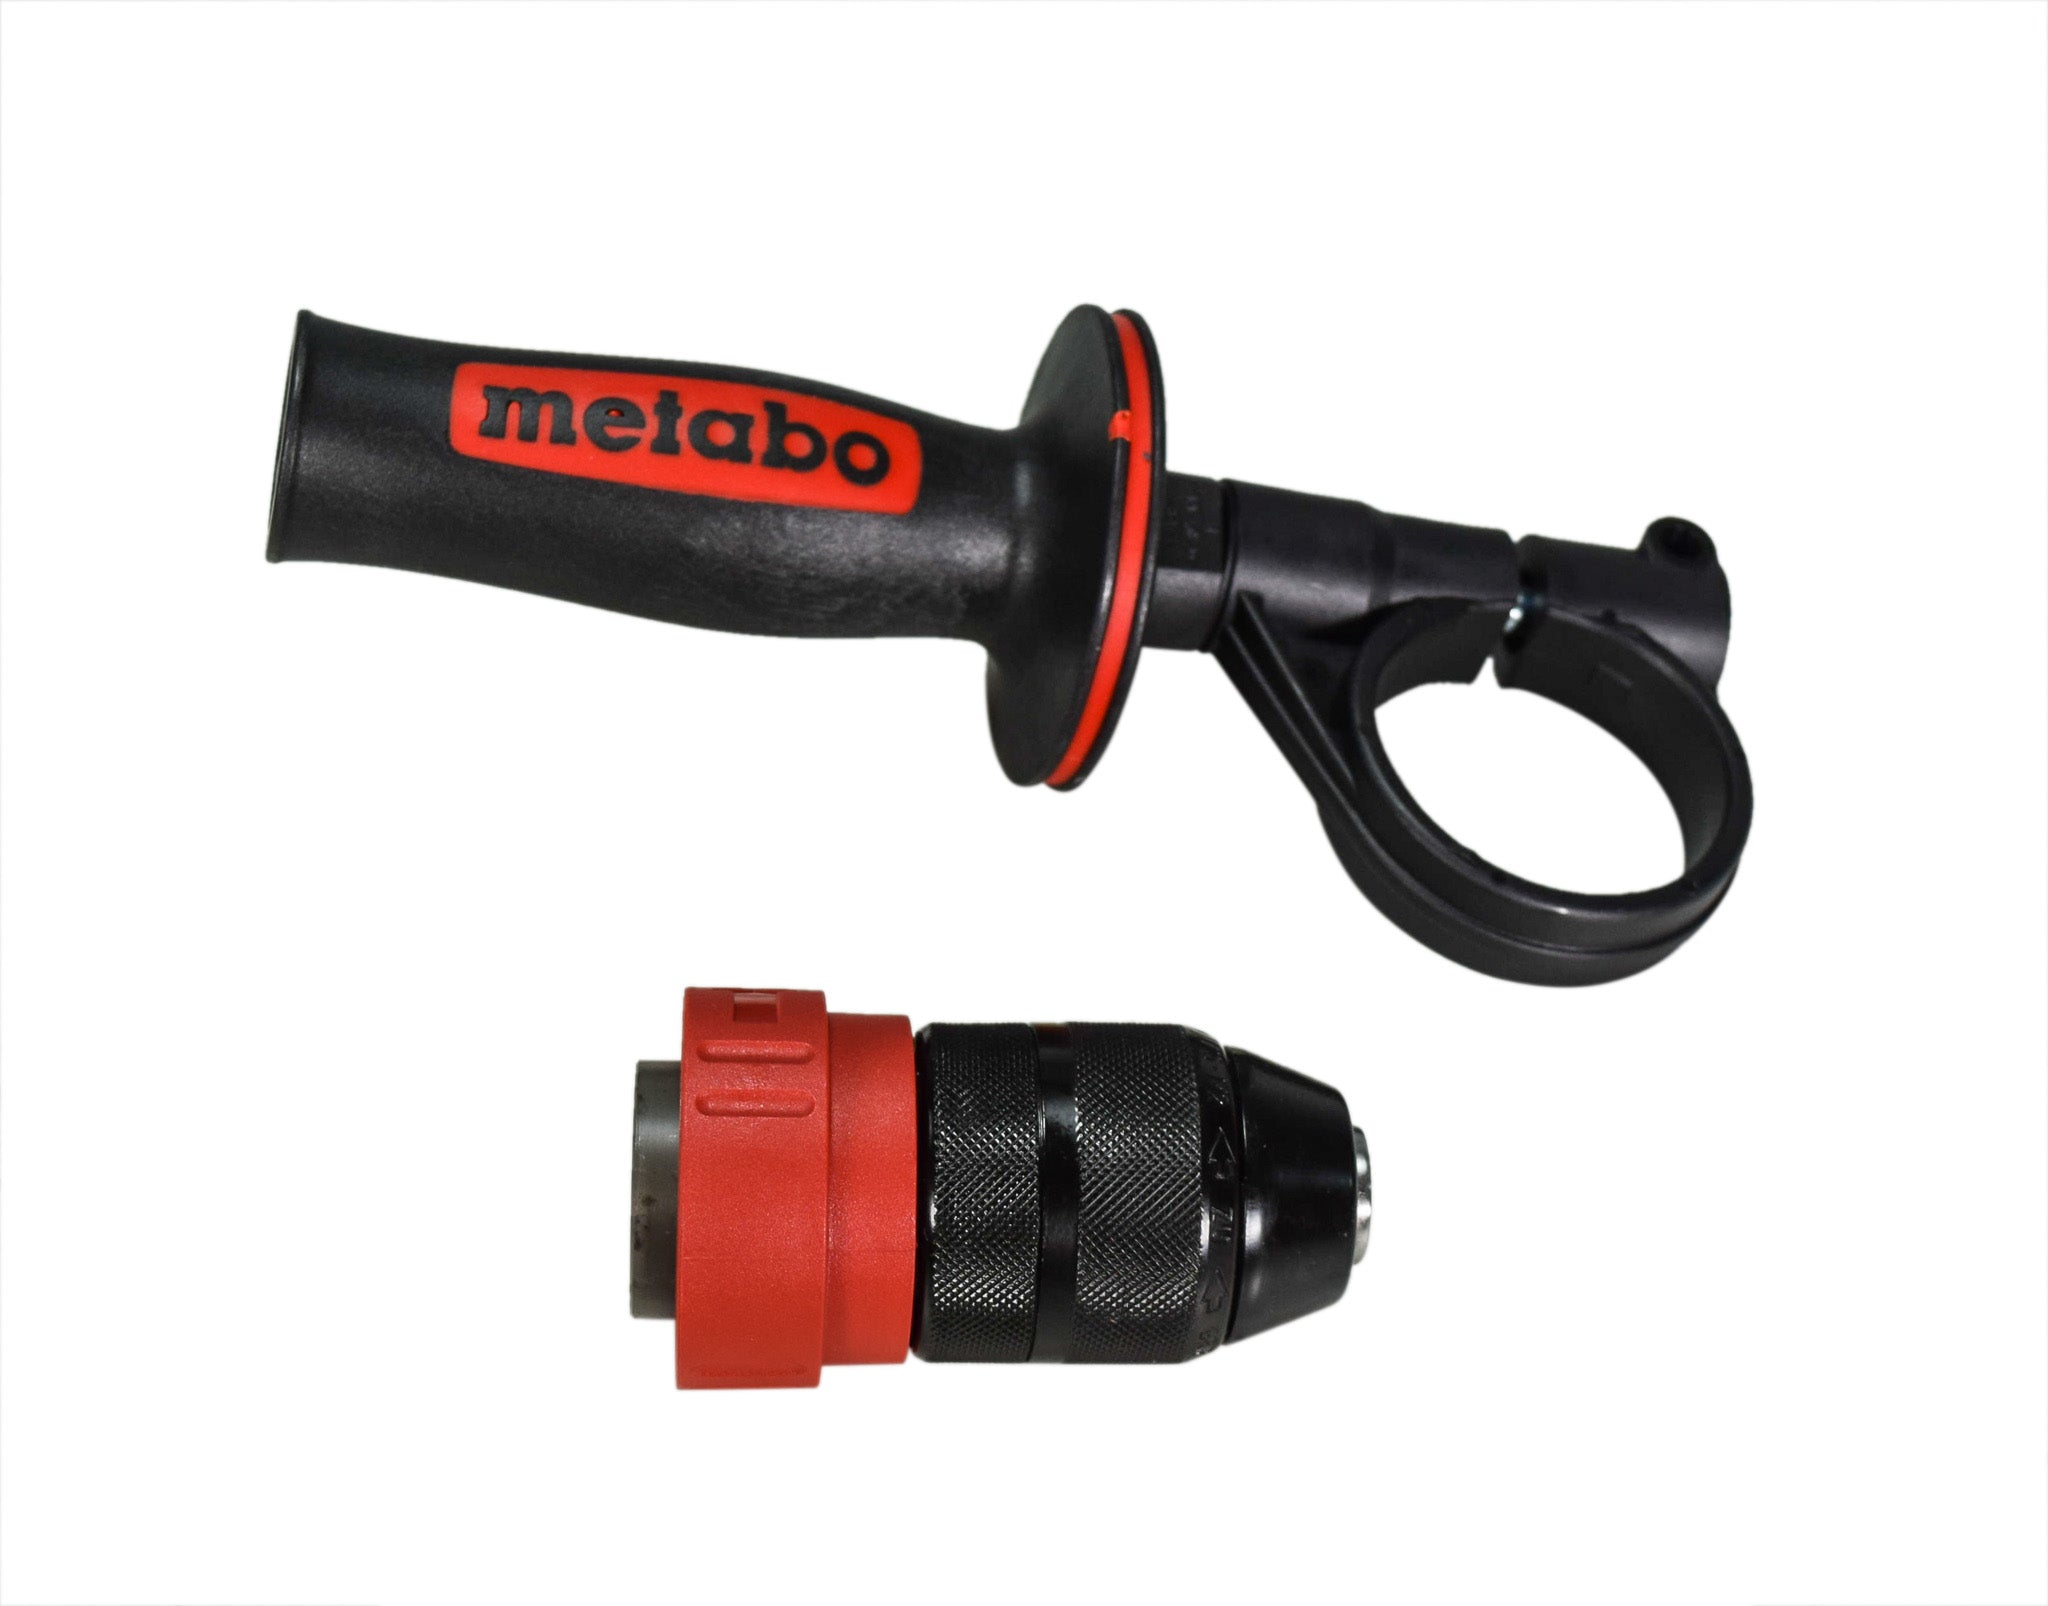 Metabo 600211900 18 Volt LTX 24 Quick Set ISA Cordless Hammer Drill (Tool Only)